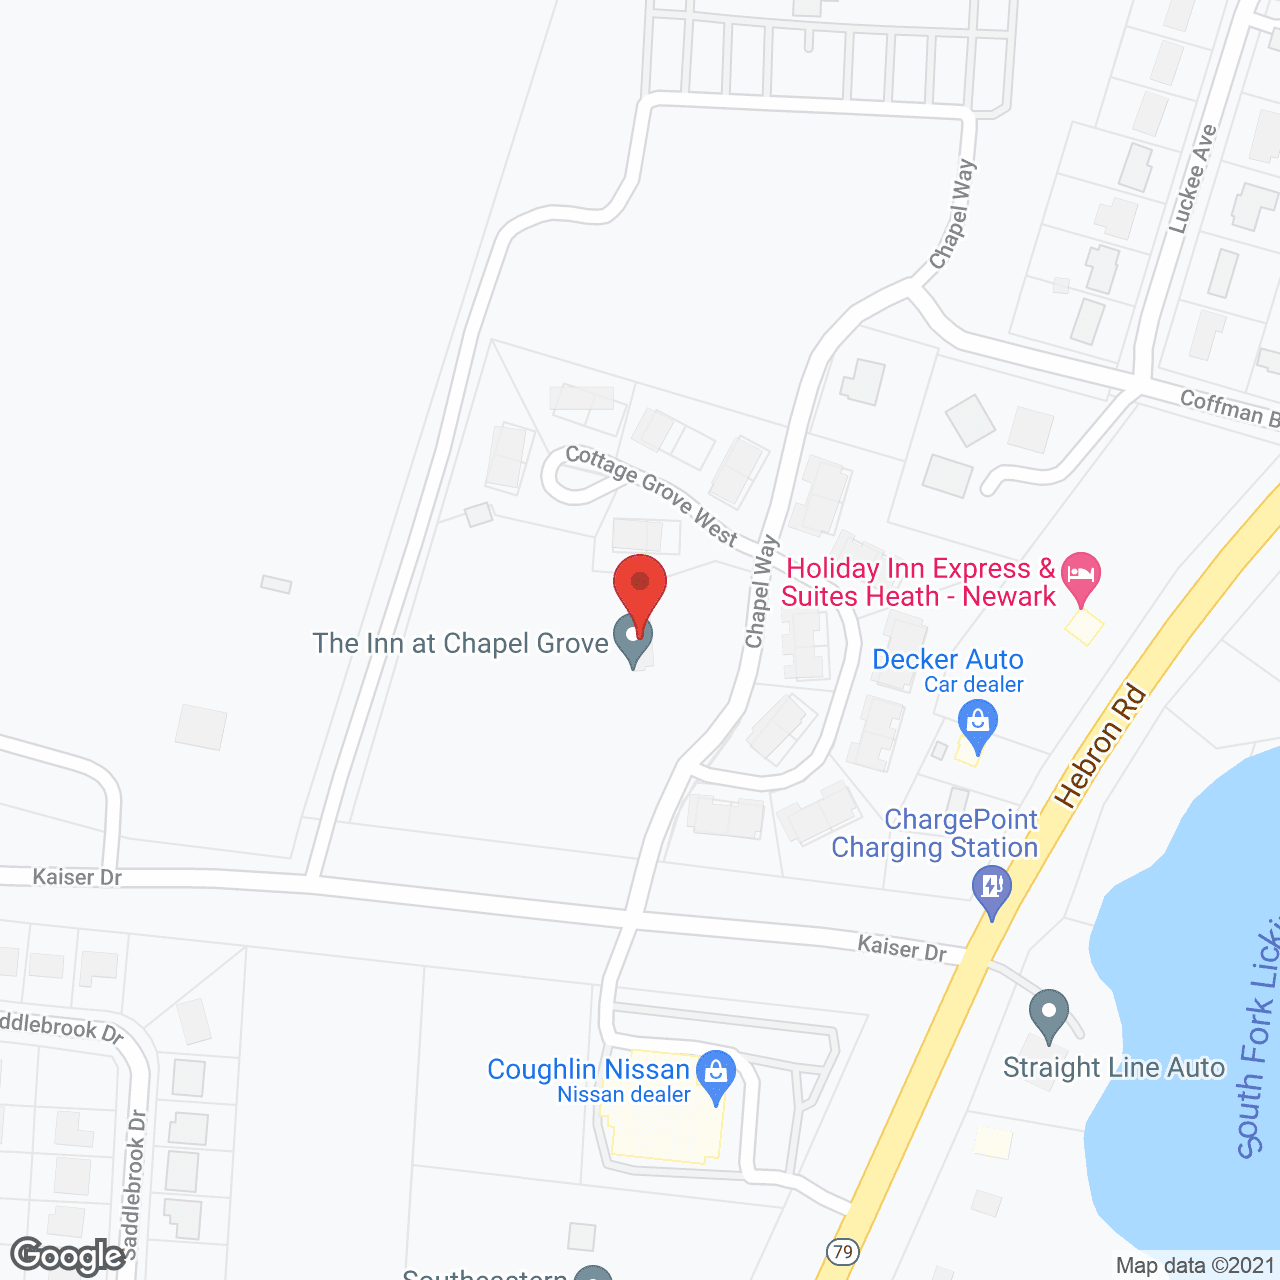 The Chapel Grove Inn in google map